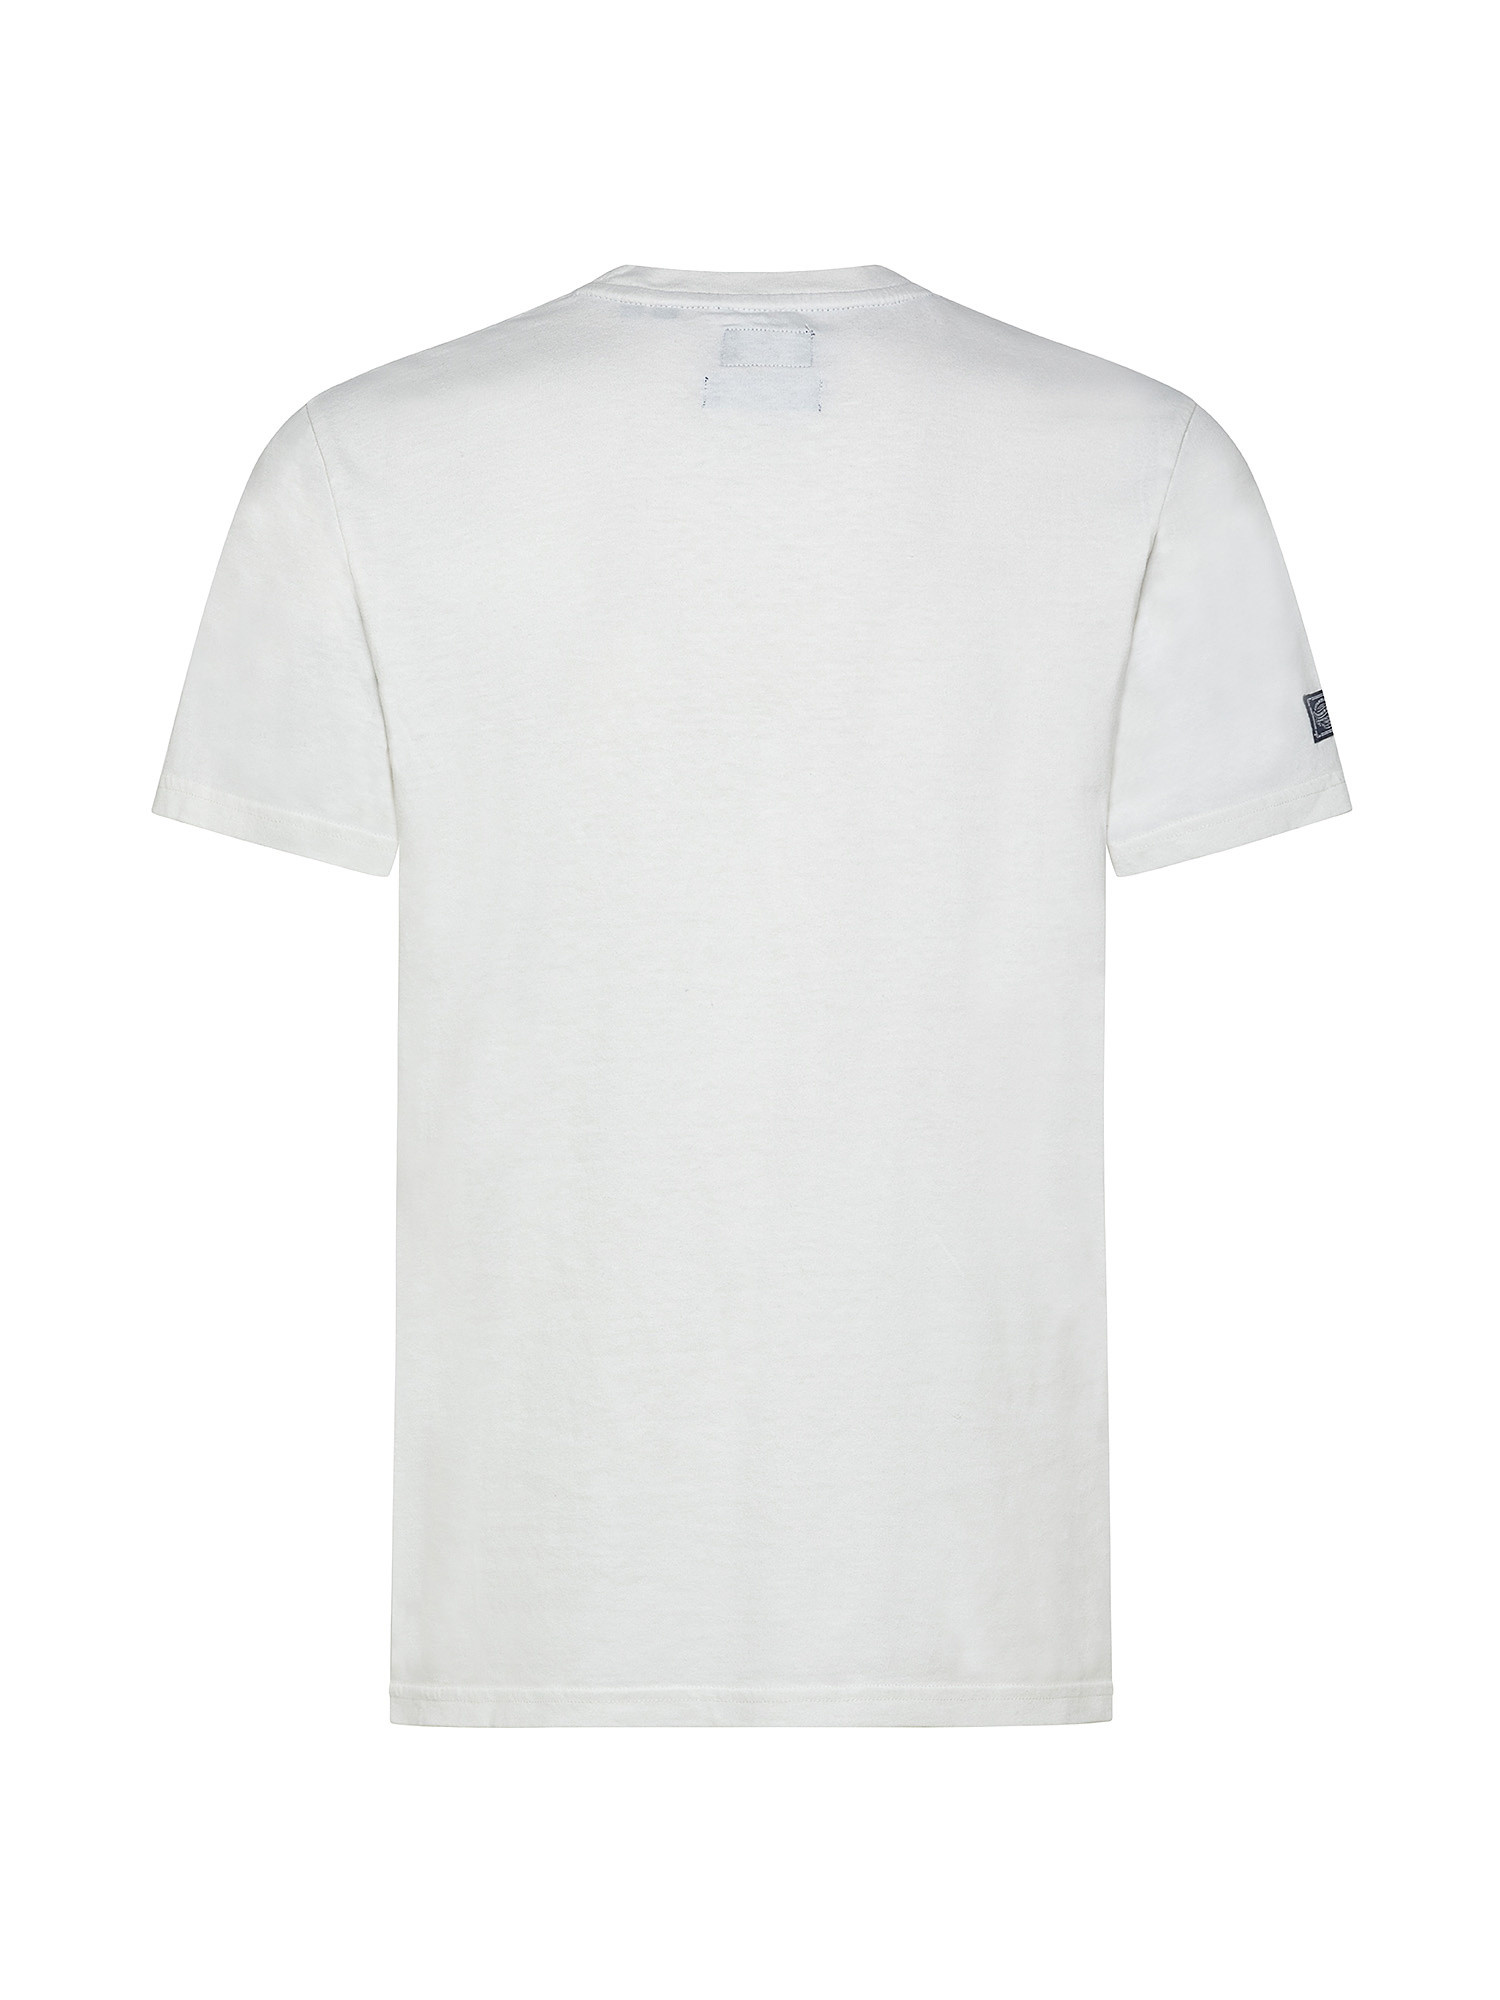 T-shirt con logo vintage, Bianco, large image number 1